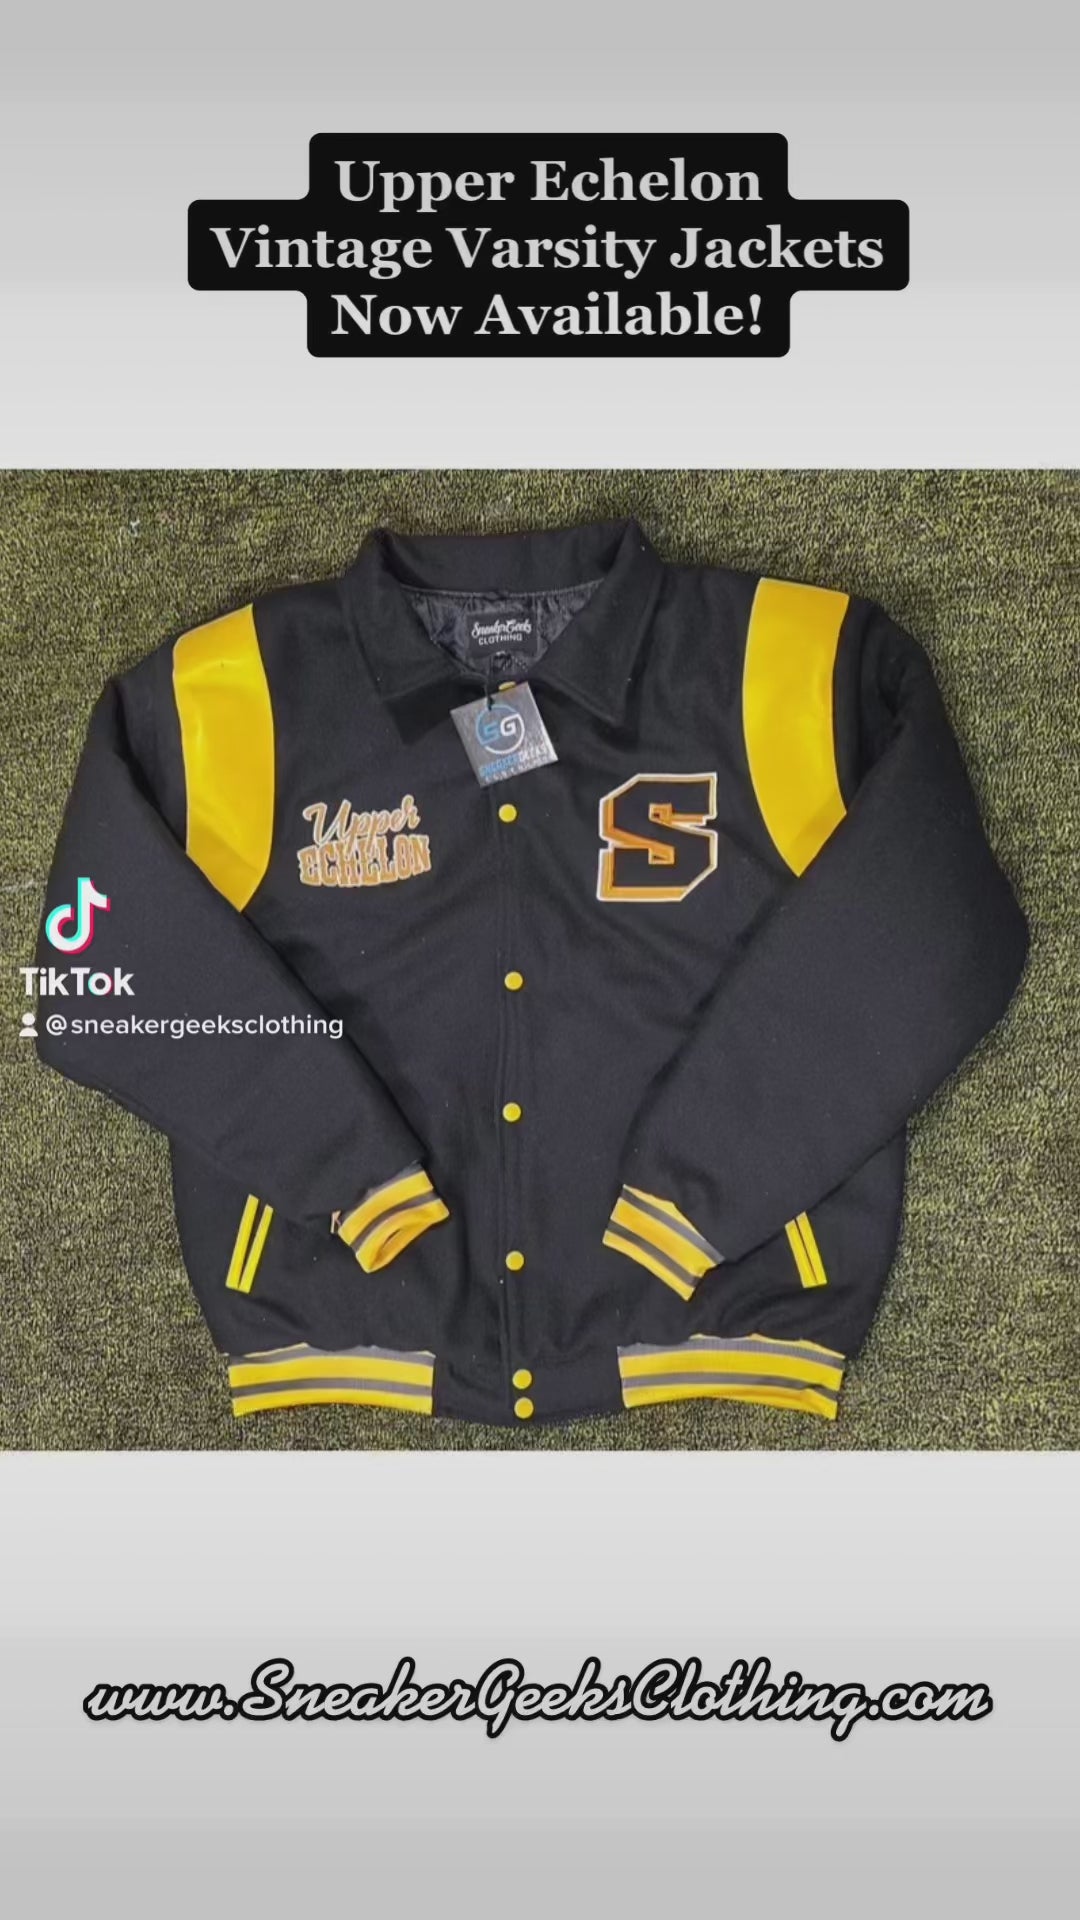 Upper Echelon Vintage Varsity Jacket to match the Retro Jordan 1 Taxi sneakers